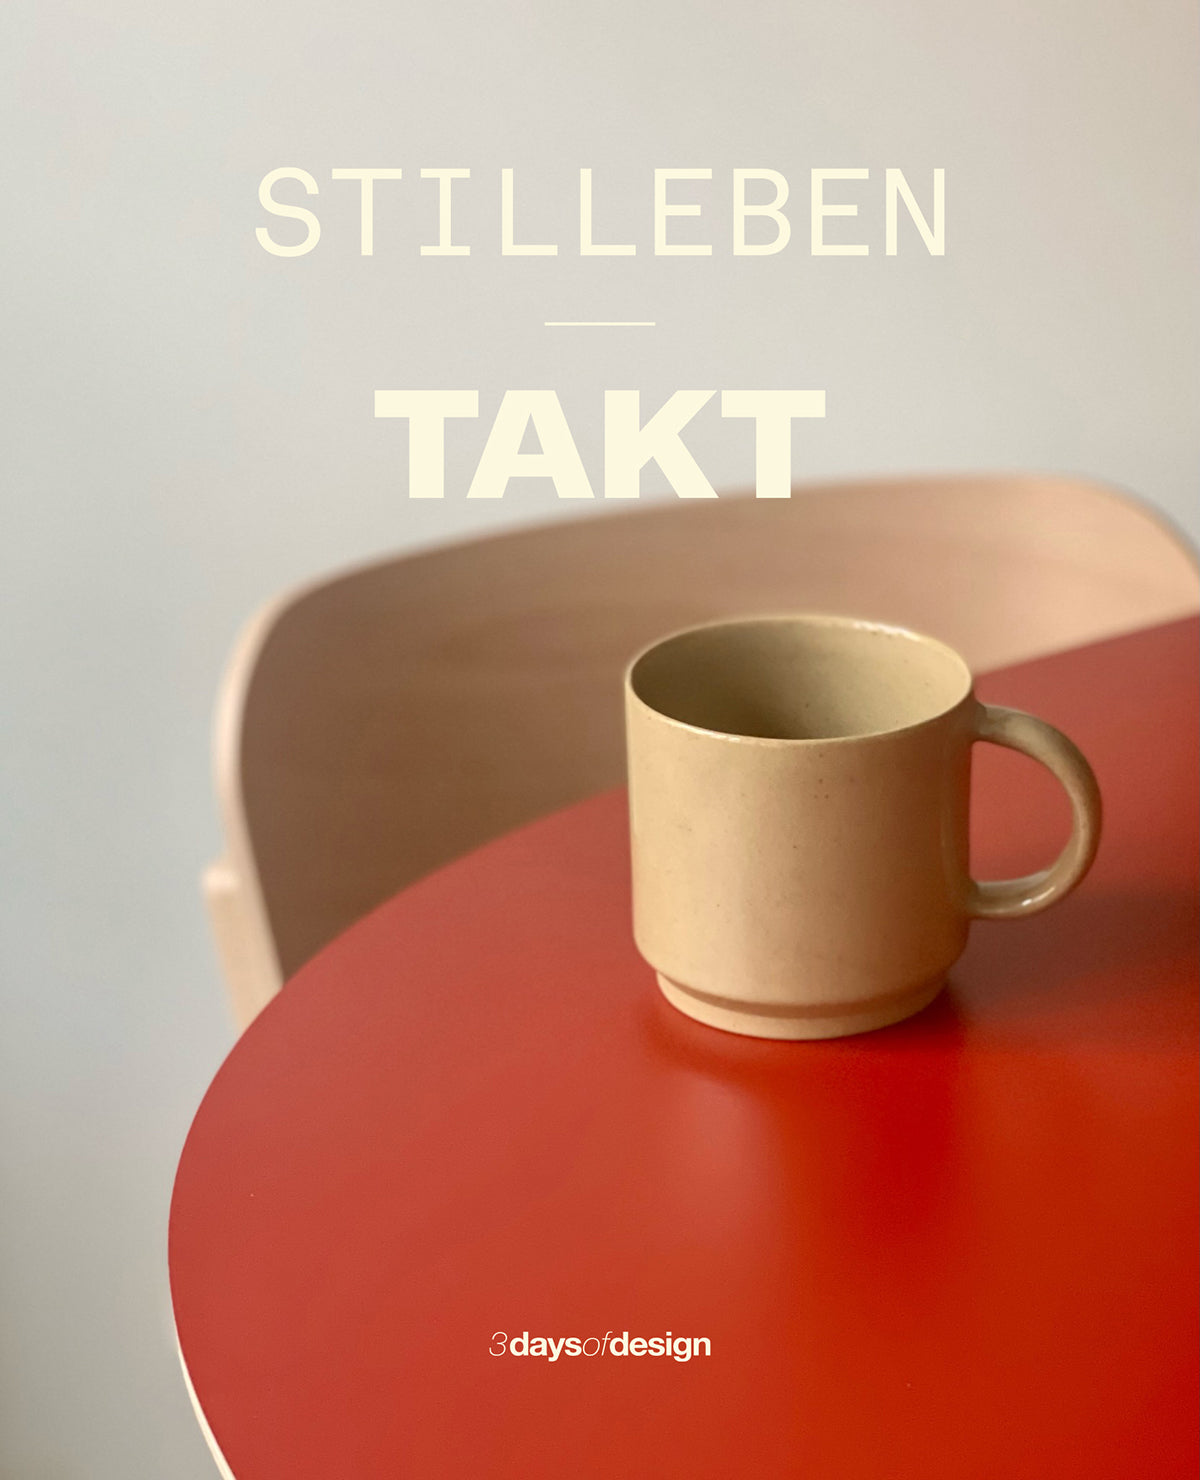 'Tablescapes' by Stilleben x TAKT